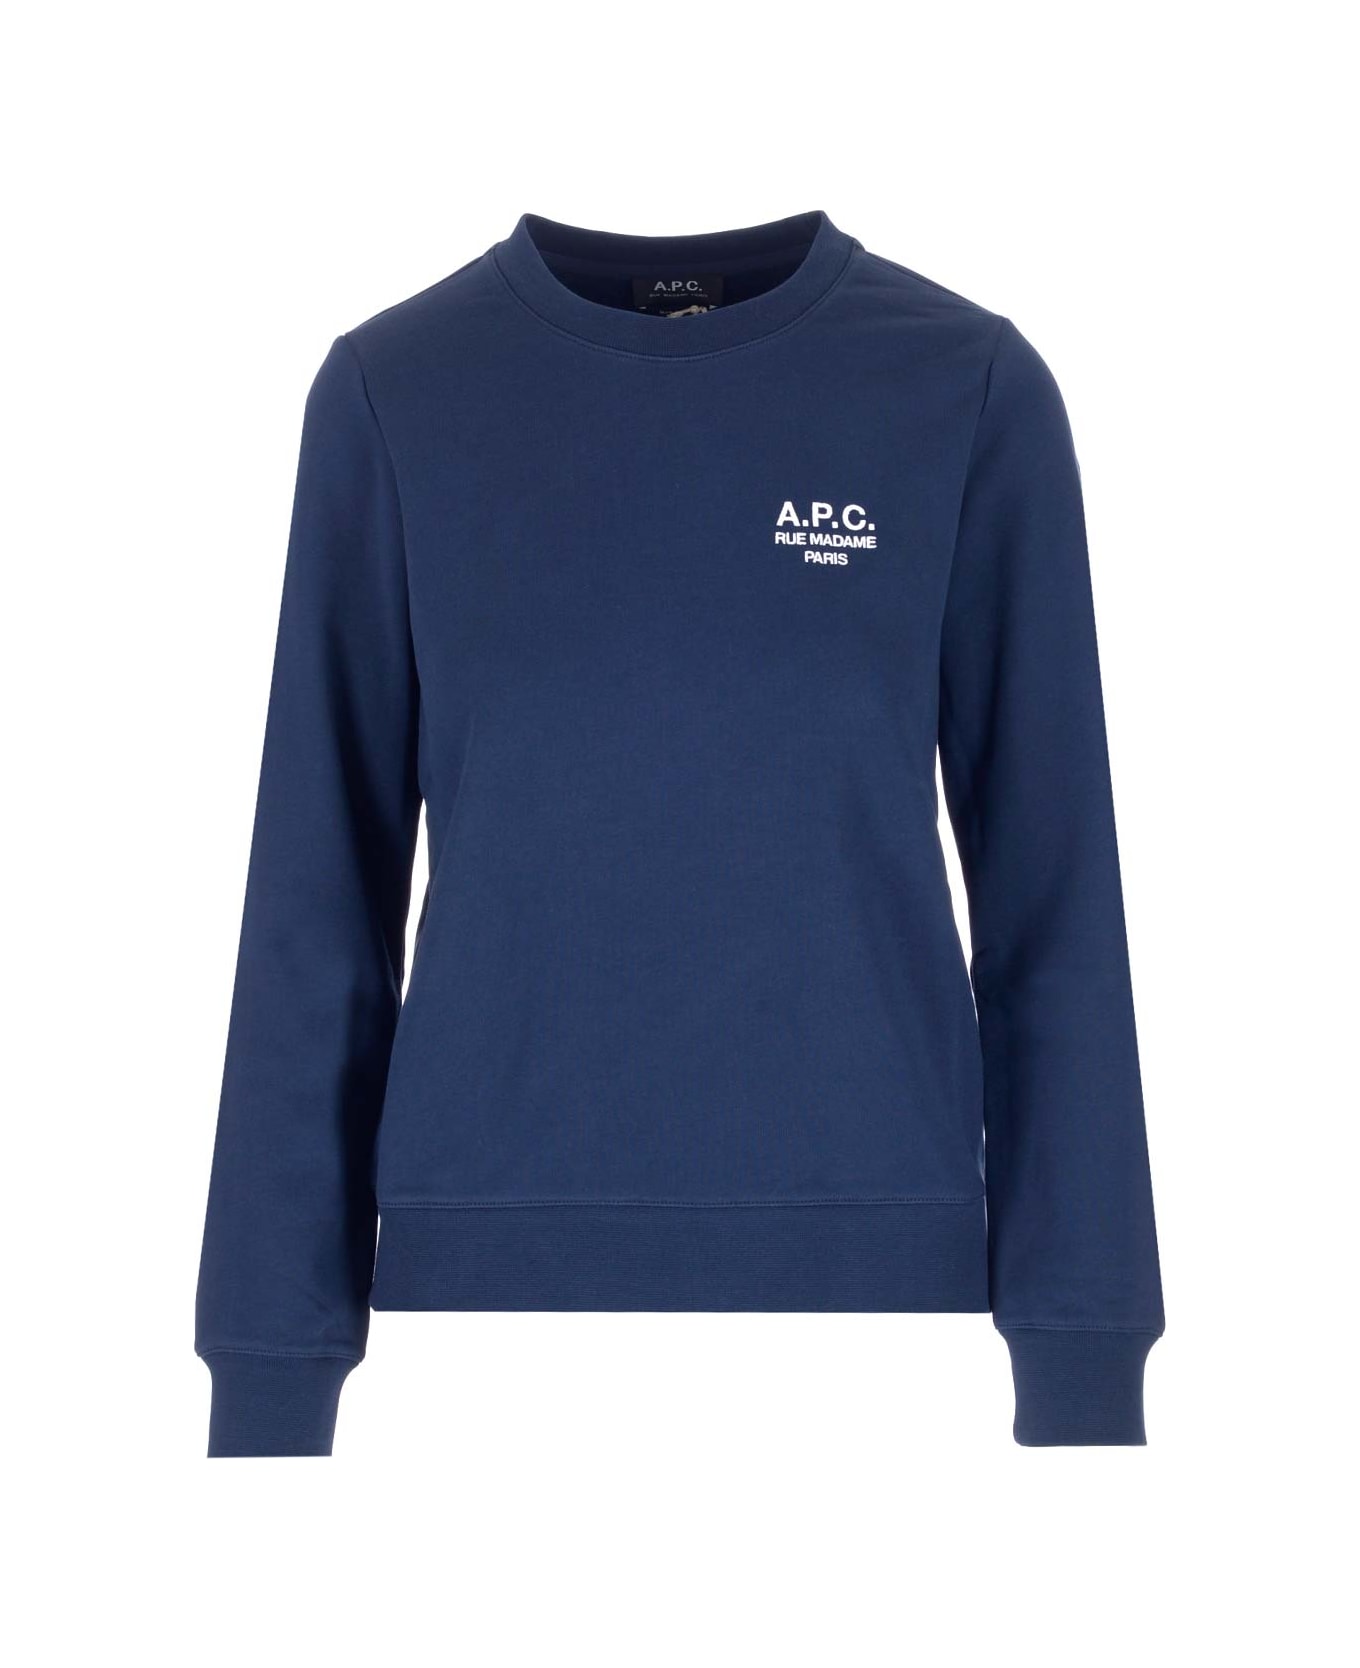 A.P.C. Rue Madame Crewneck Sweatshirt - Blue